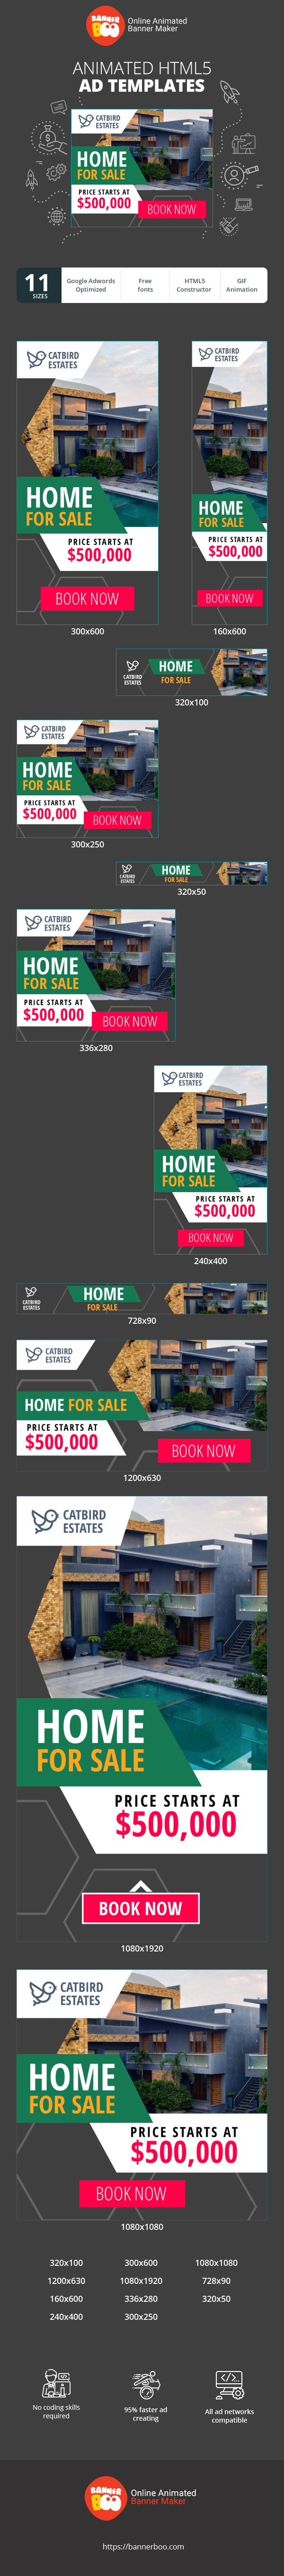 Szablon reklamy banerowej — House For Sale — Price Starts At $500000